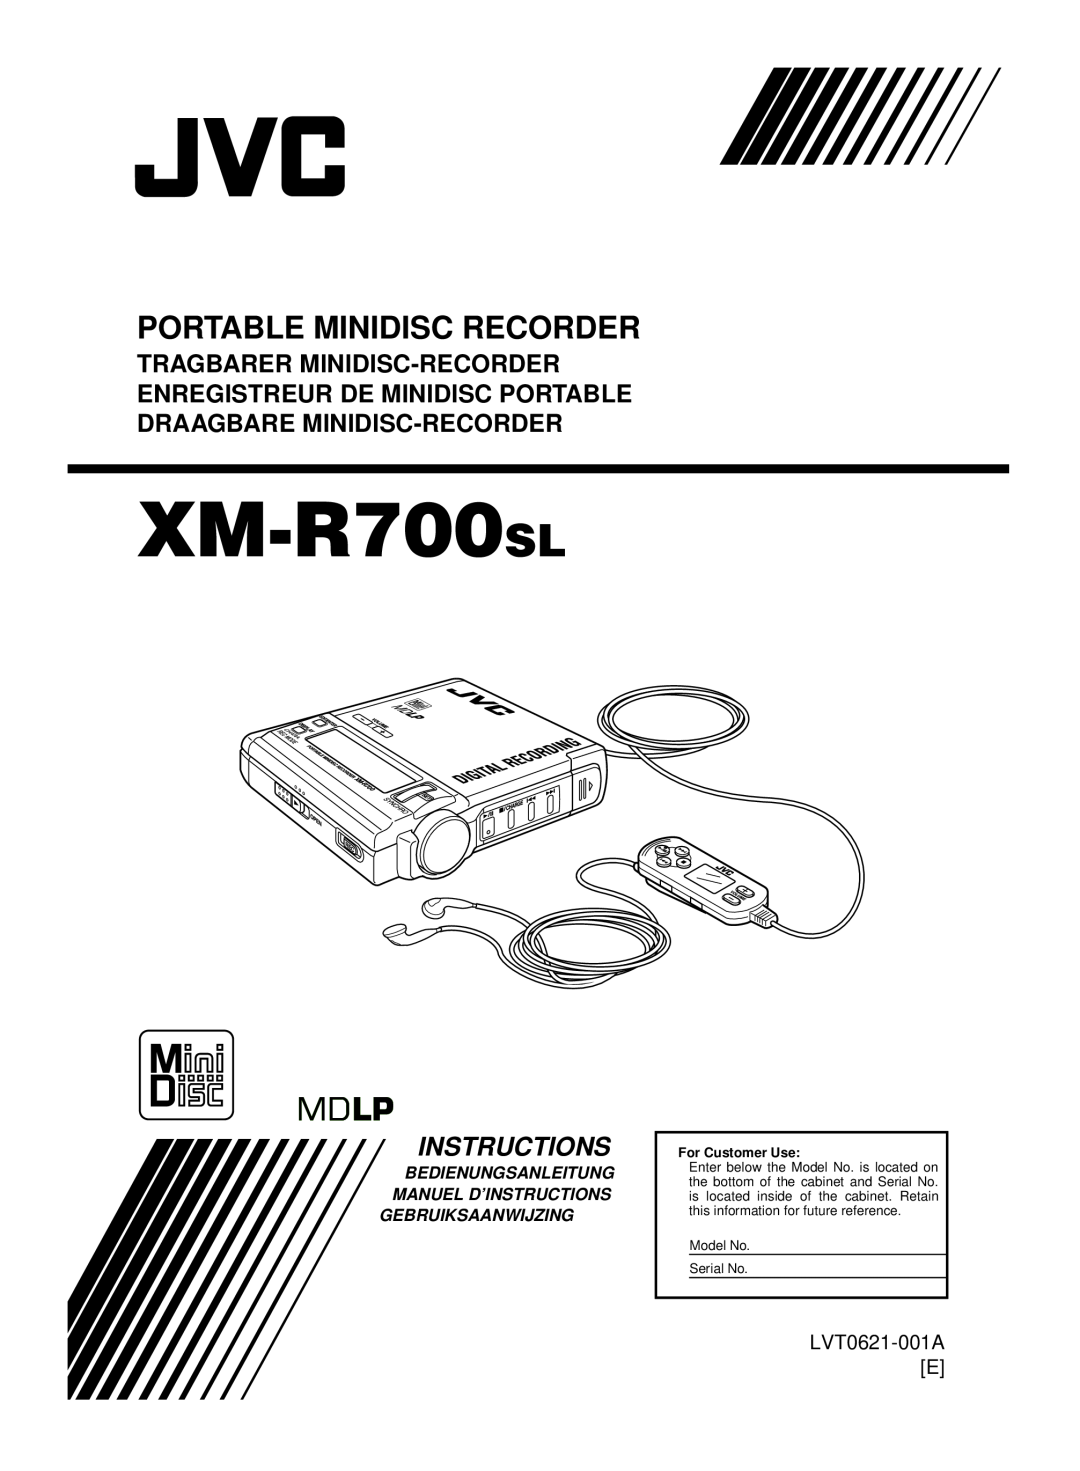 JVC XM-R700SL manual Portable Minidisc Recorder, LVT0621-001AE, Bedienungsanleitung Manuel D’Instructions 